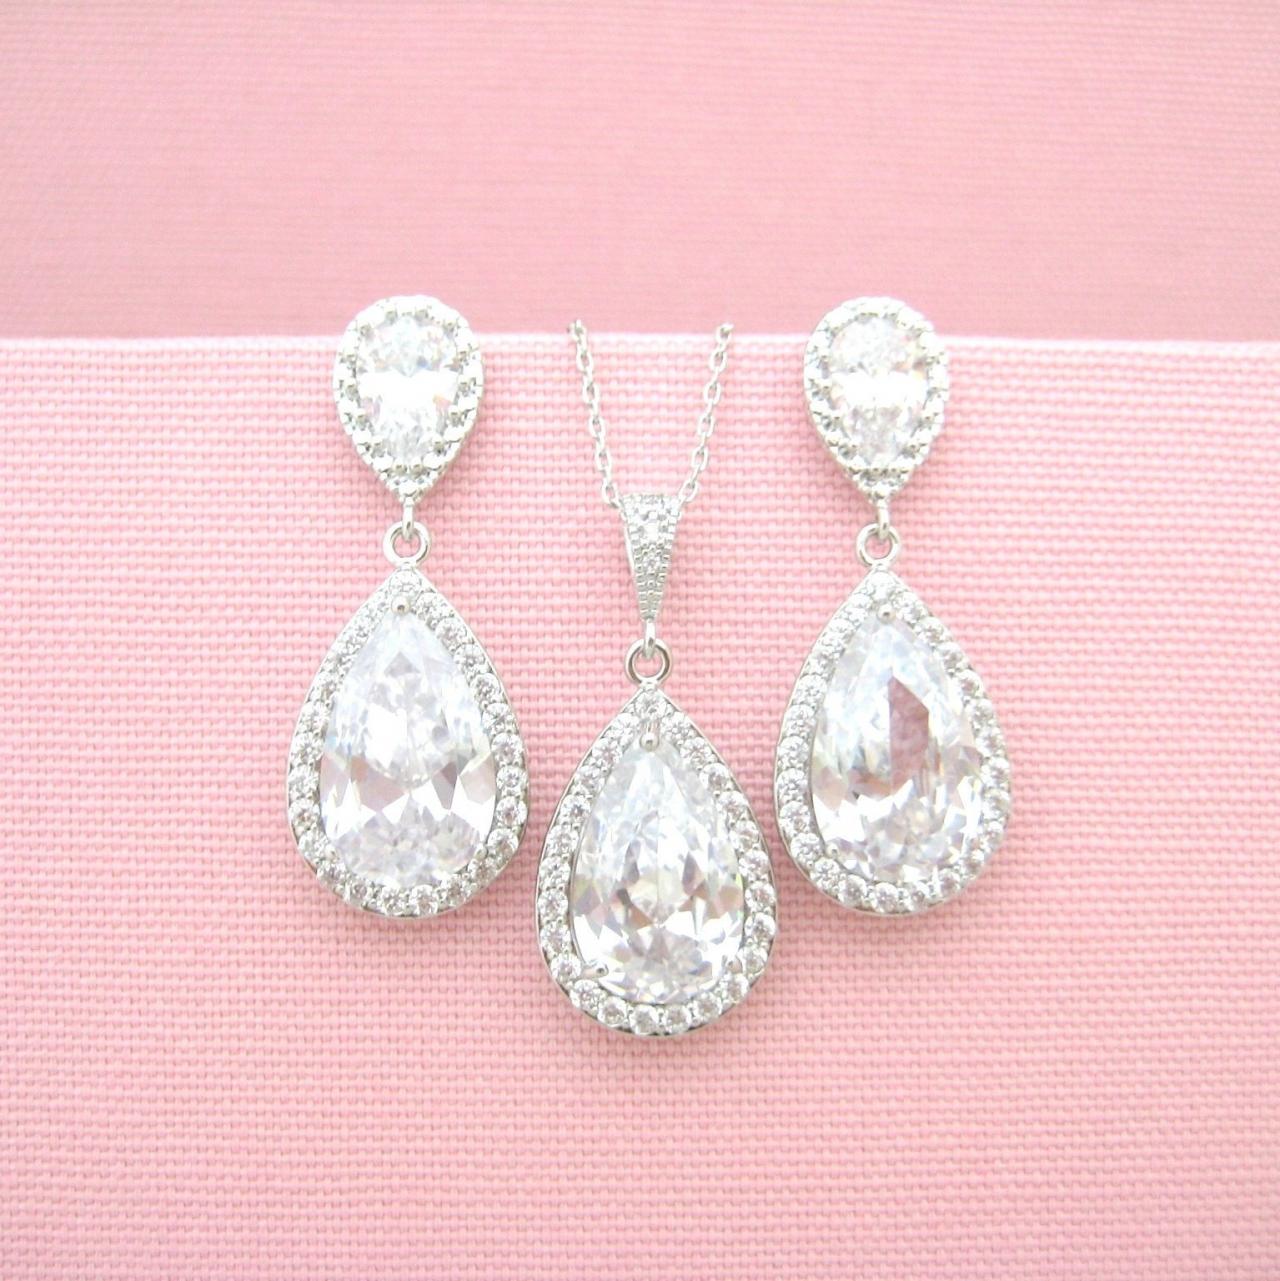 Bridal Crystal Earrings & Necklace Gift Set Cubic Zirconia Teardrop Earrings Wedding Jewelry Drop Dangle Earrings Bridesmaid Gift (ne039)